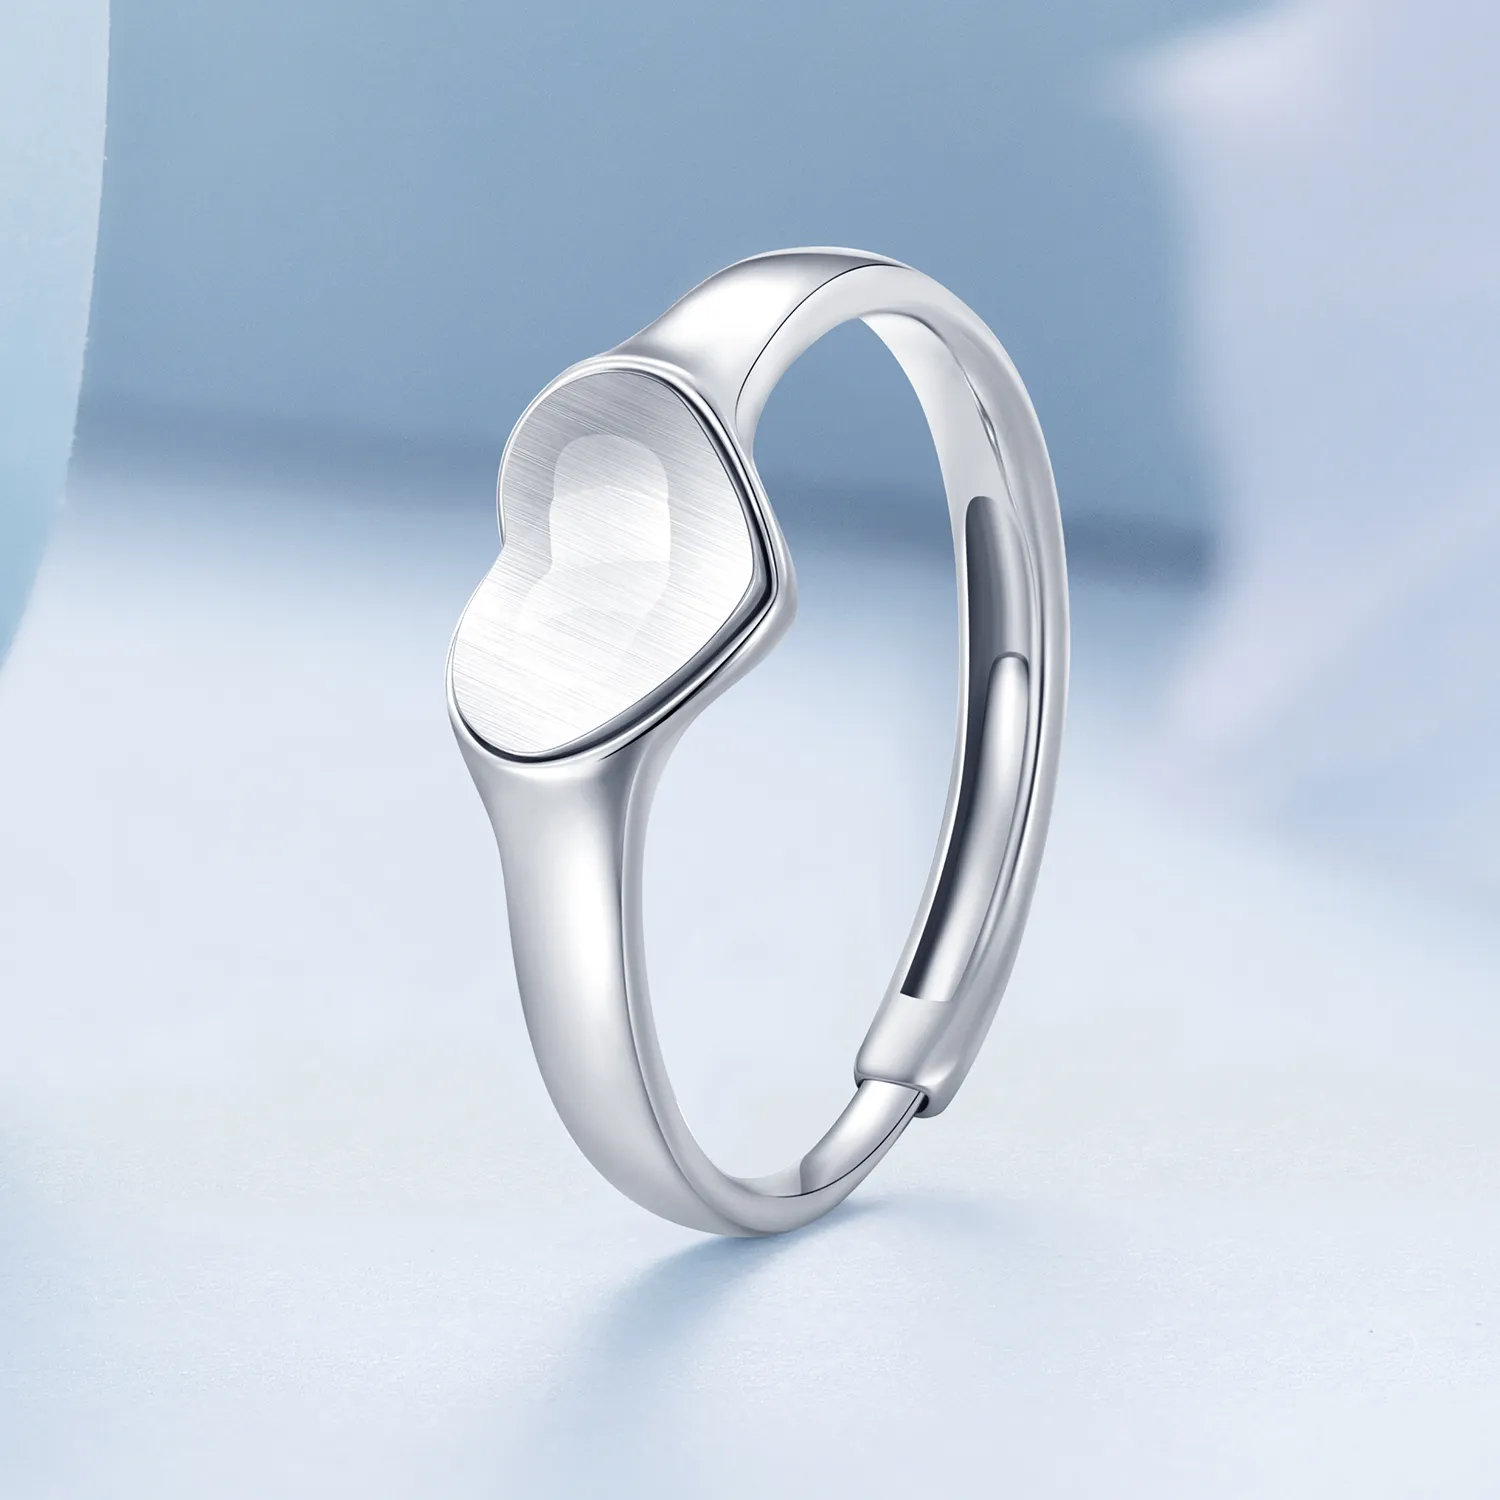 Pandora Style Heart-Shaped Reflective Ring - BSR434